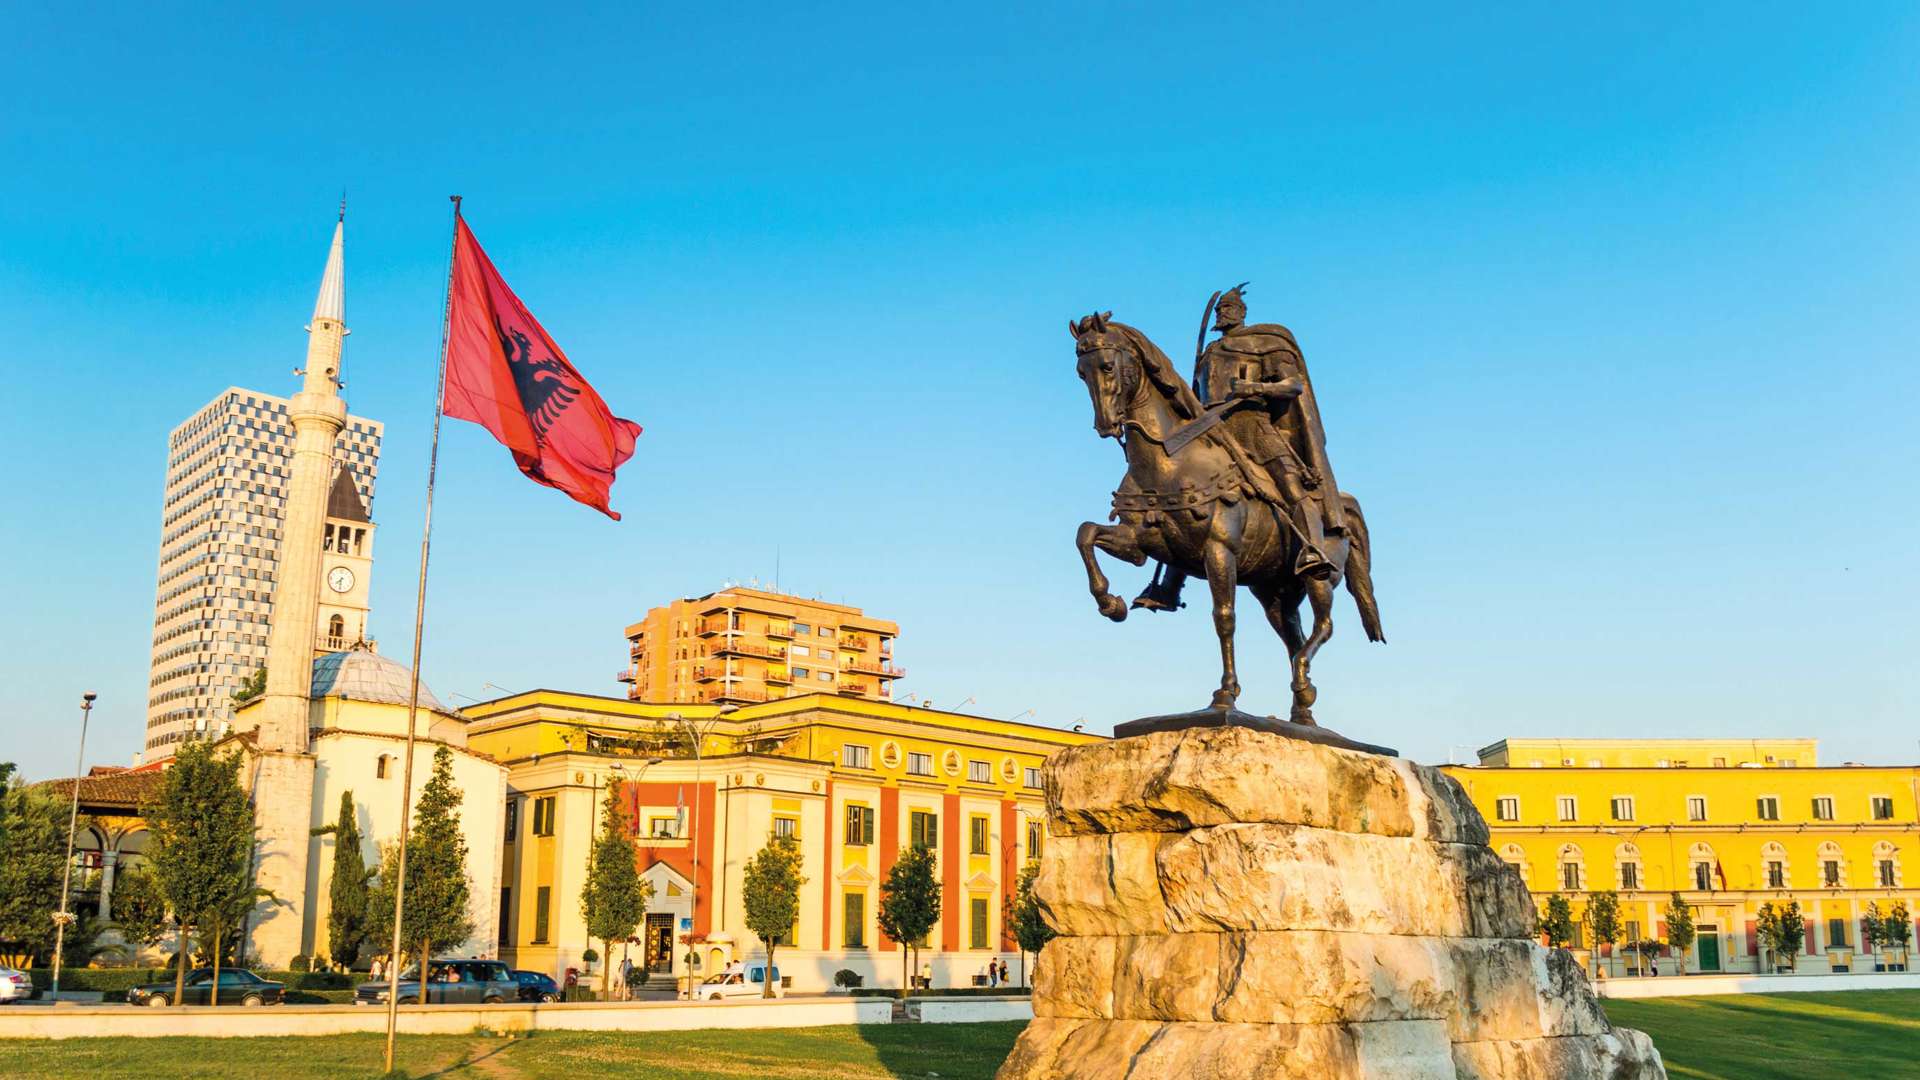 Skanderbeg Square With Skanderbeg Monument And The Et'hem Bey Mosque, Tirana, Albania